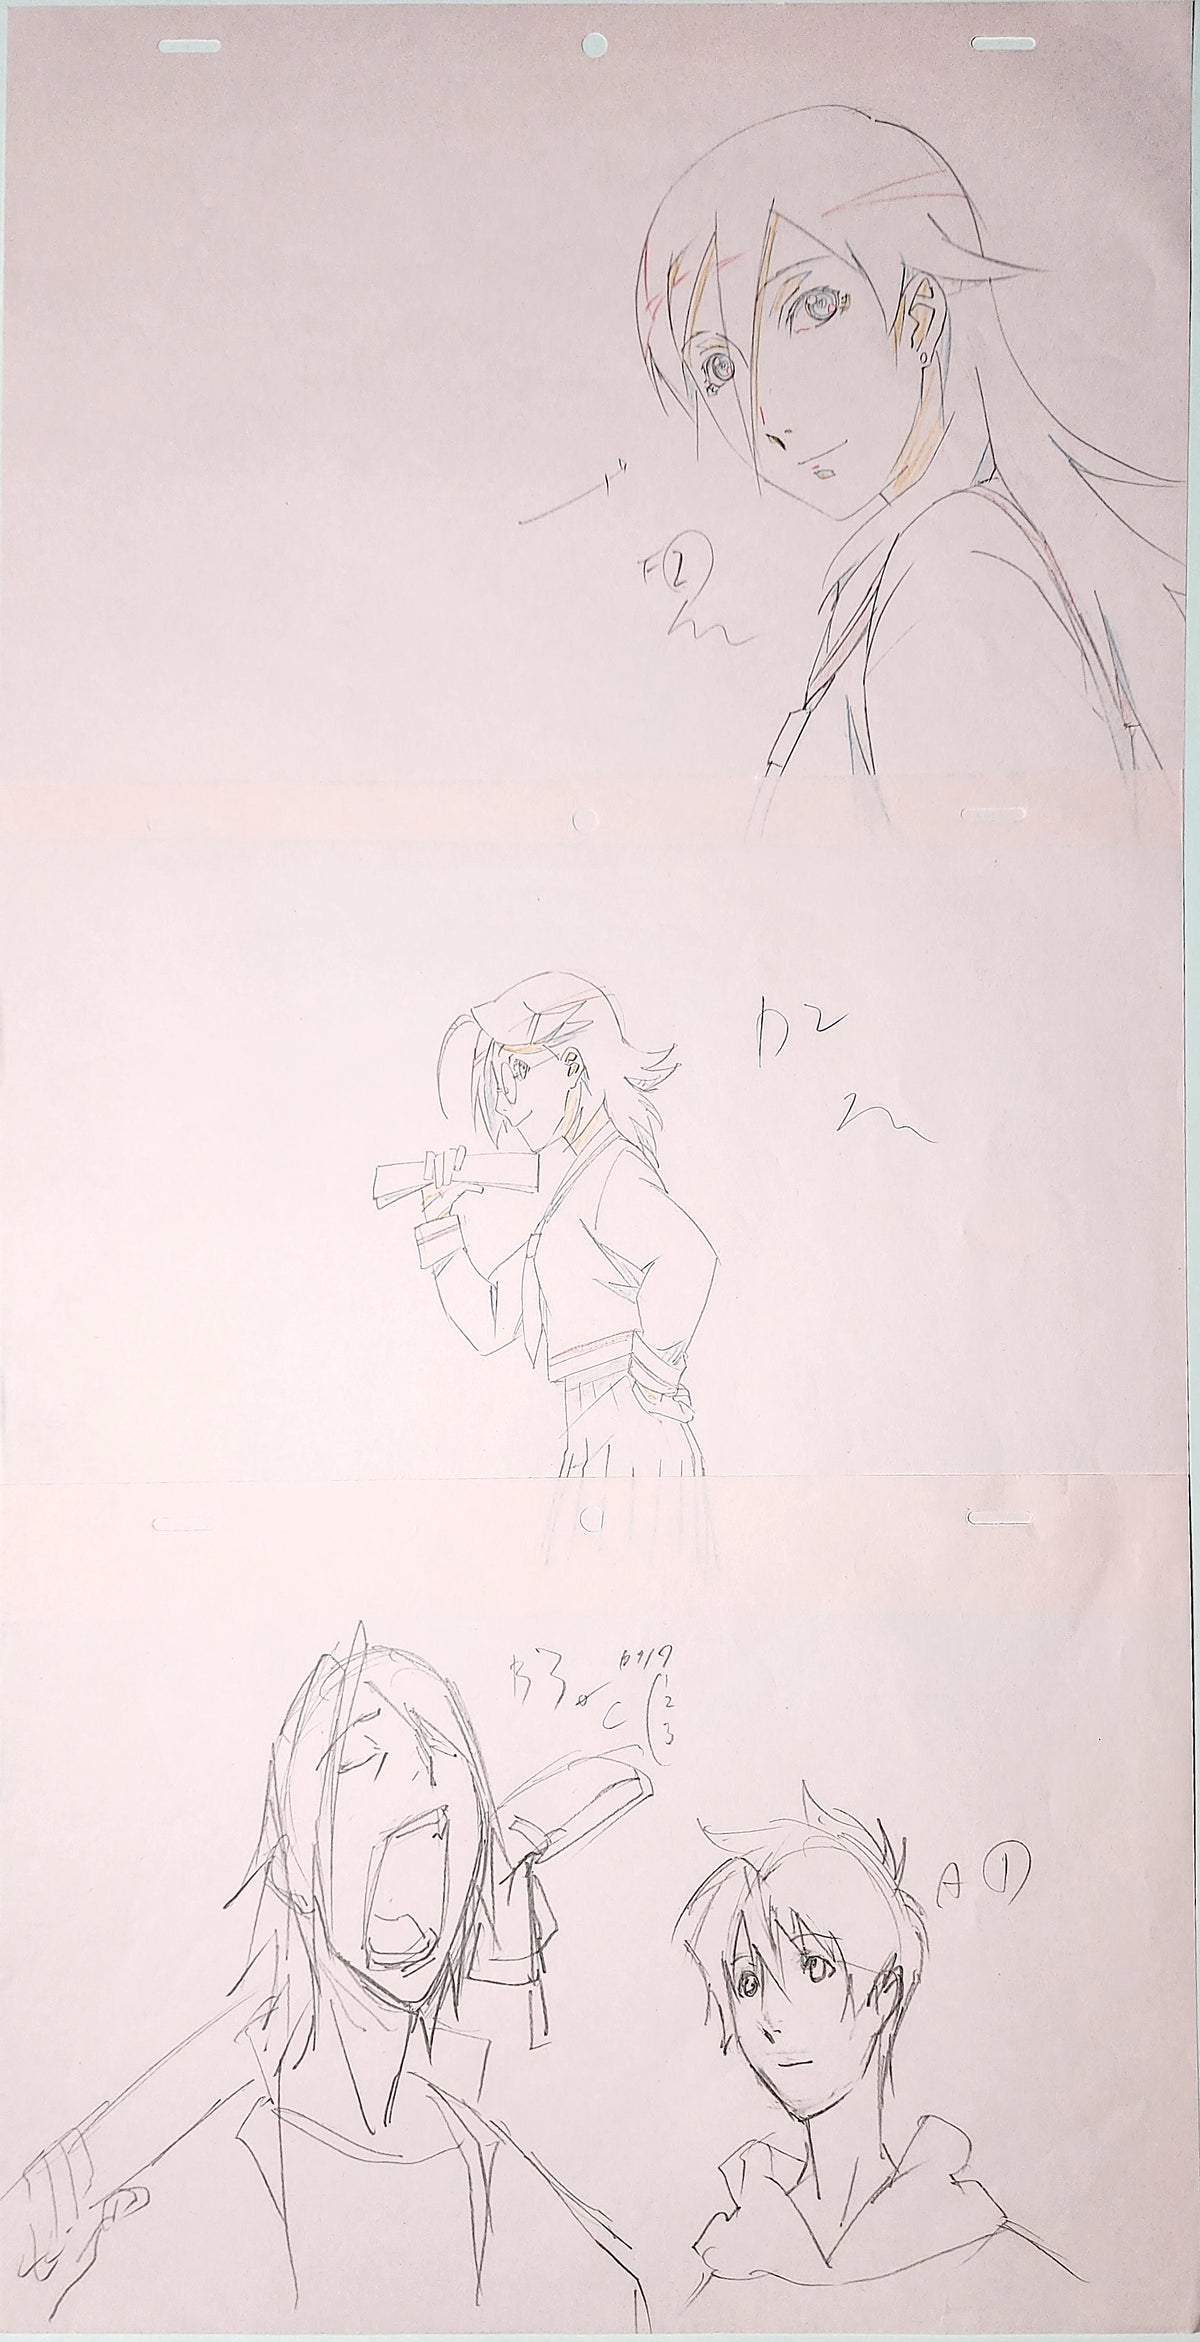 Tokyo Majin Anime Animation Production Cel Drawing: 6 Sheets - 4416